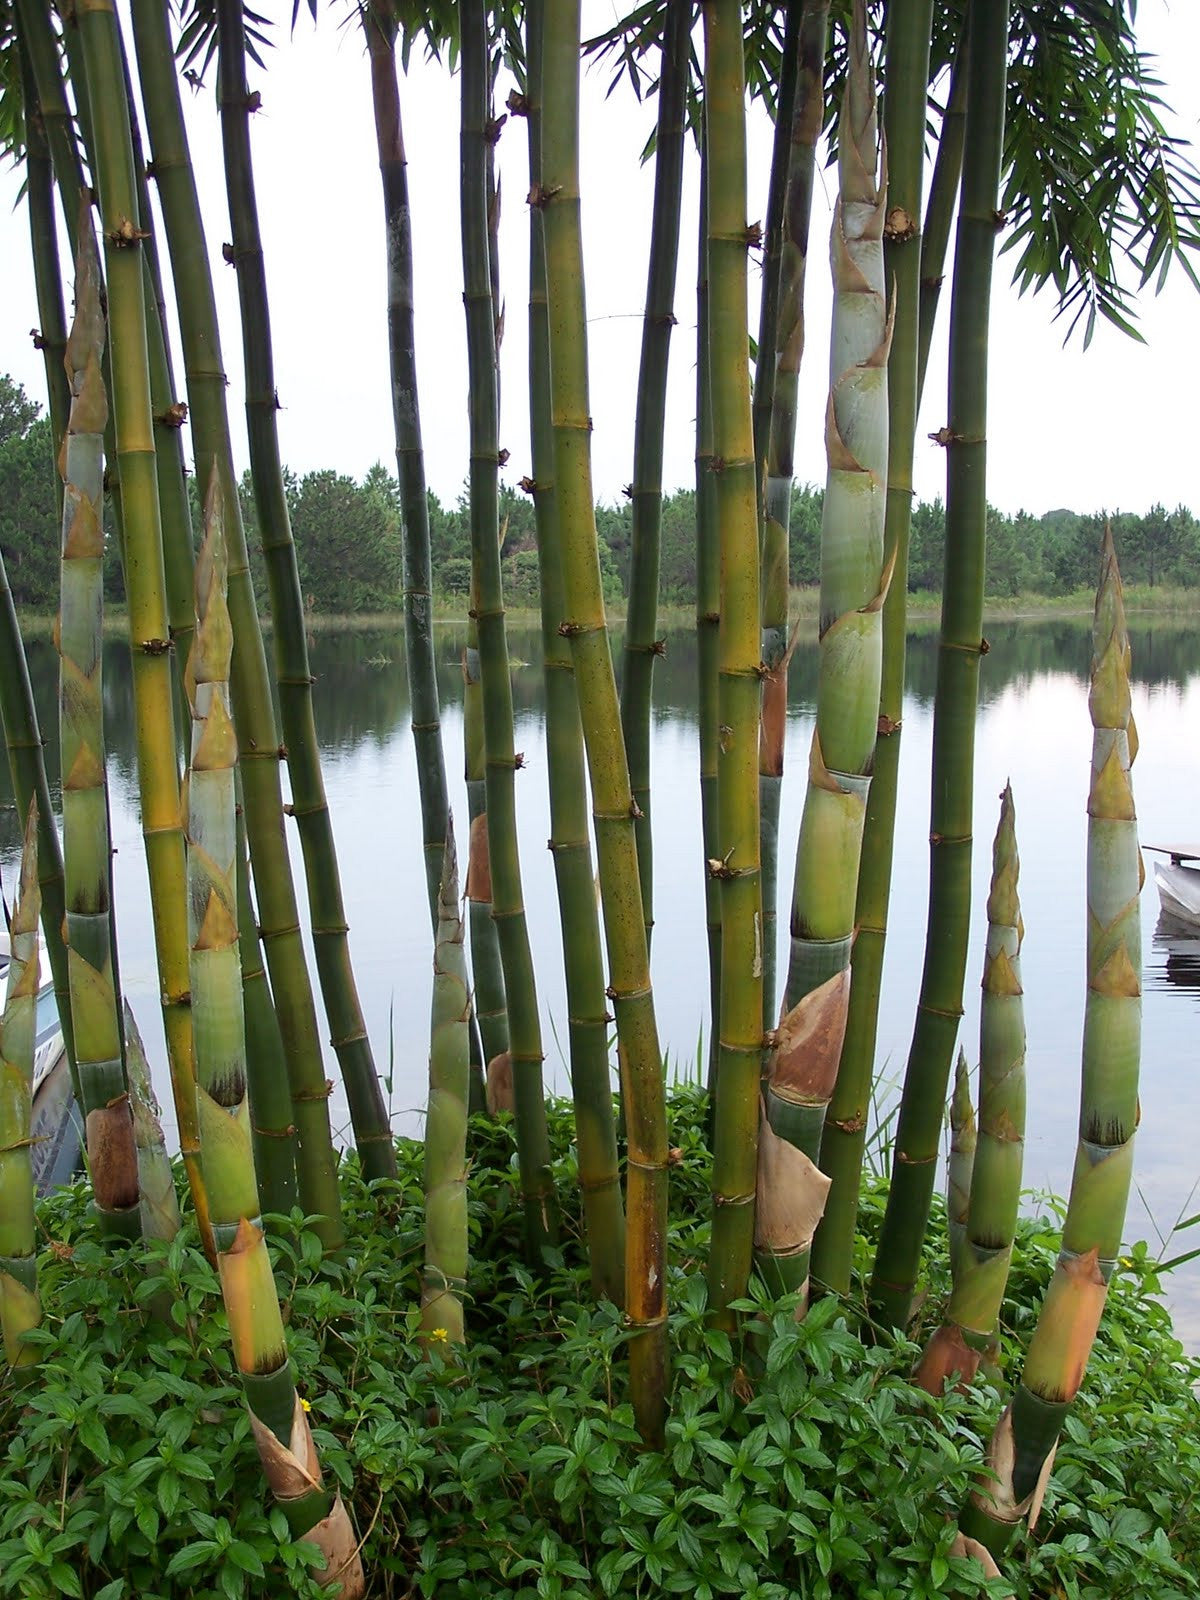 Giant Timber Bamboo, Bambusa oldhamii, Monrovia Plant